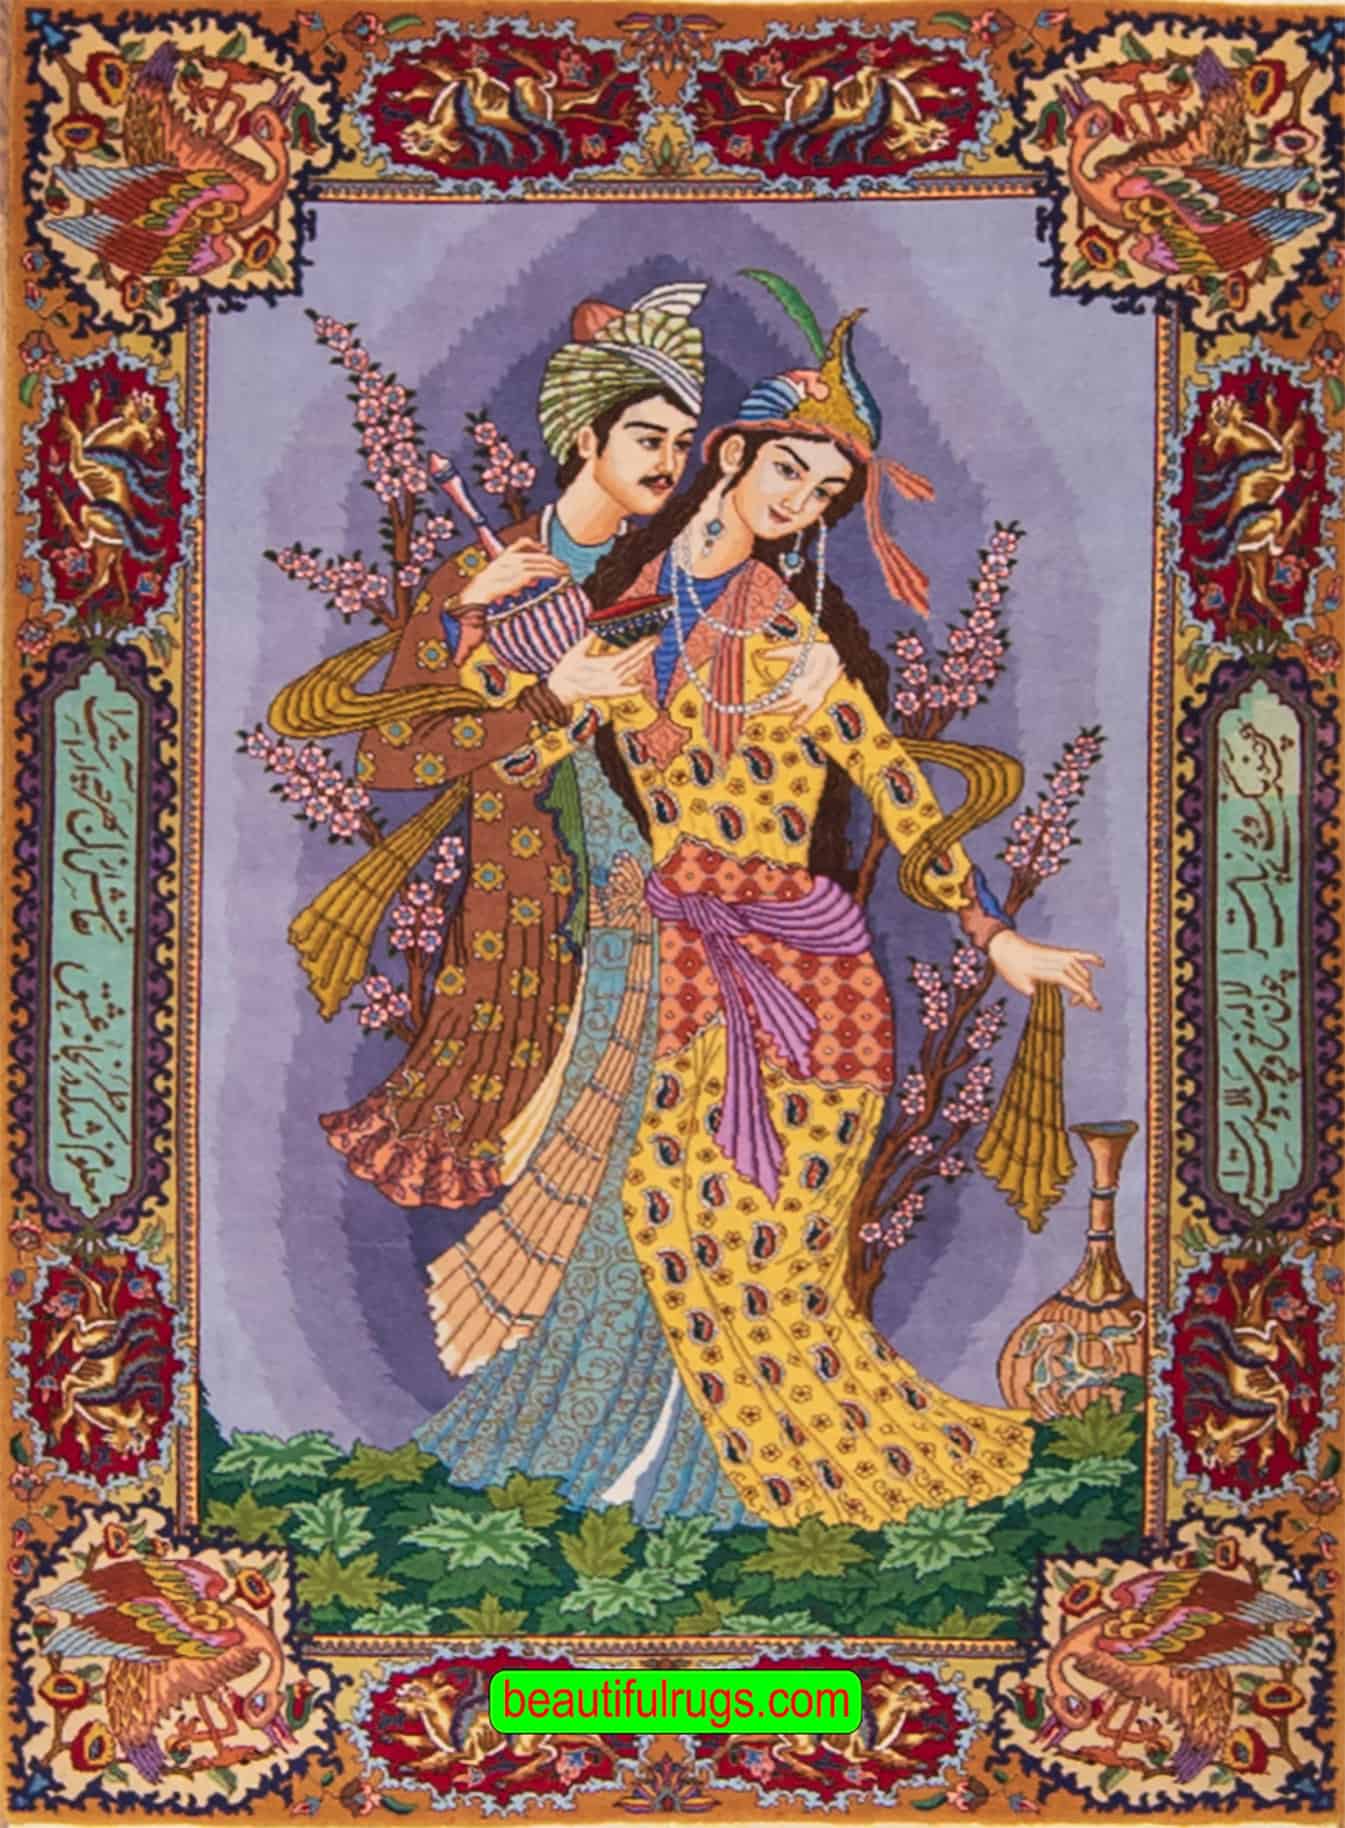 Handmade Persian Tabriz wall rug. Size 3.3x4.7